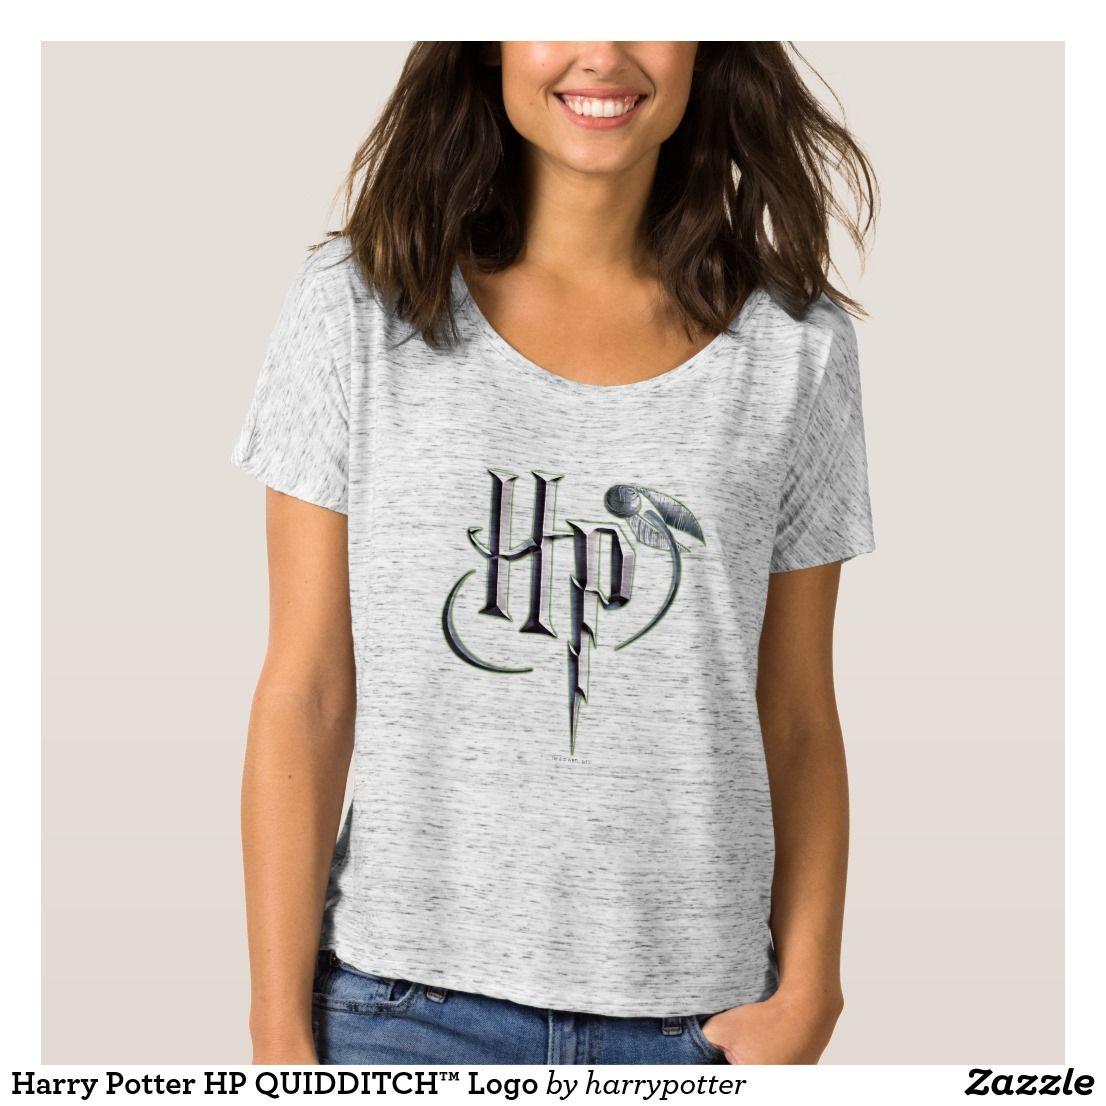 Big Harry Potter HP Logo - Harry Potter HP QUIDDITCH™ Logo T-Shirt | Harry Potter | Pinterest ...